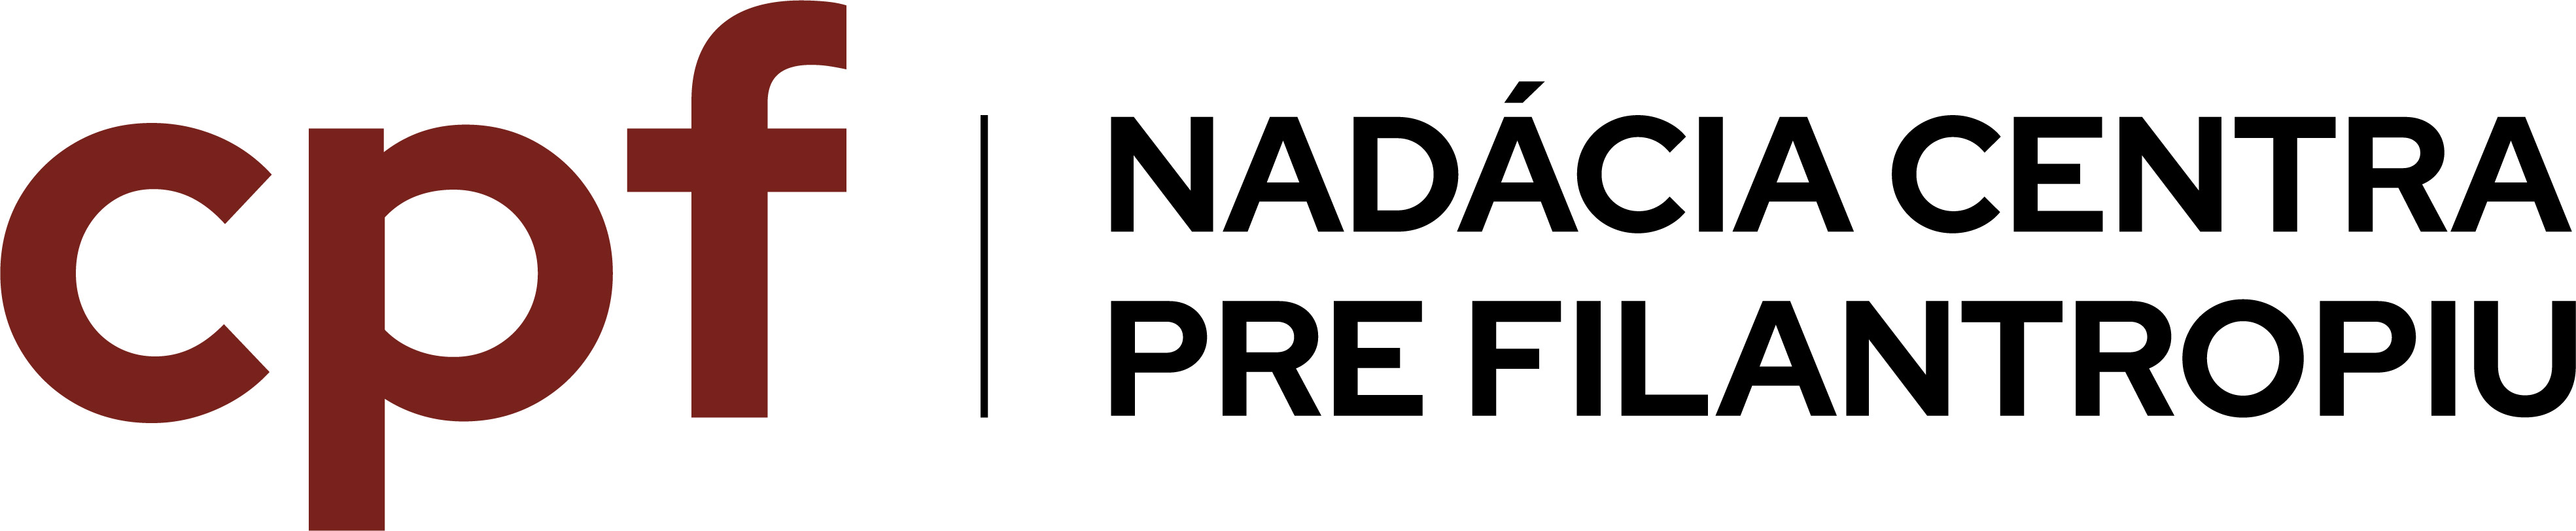 5 ncpf logo primary